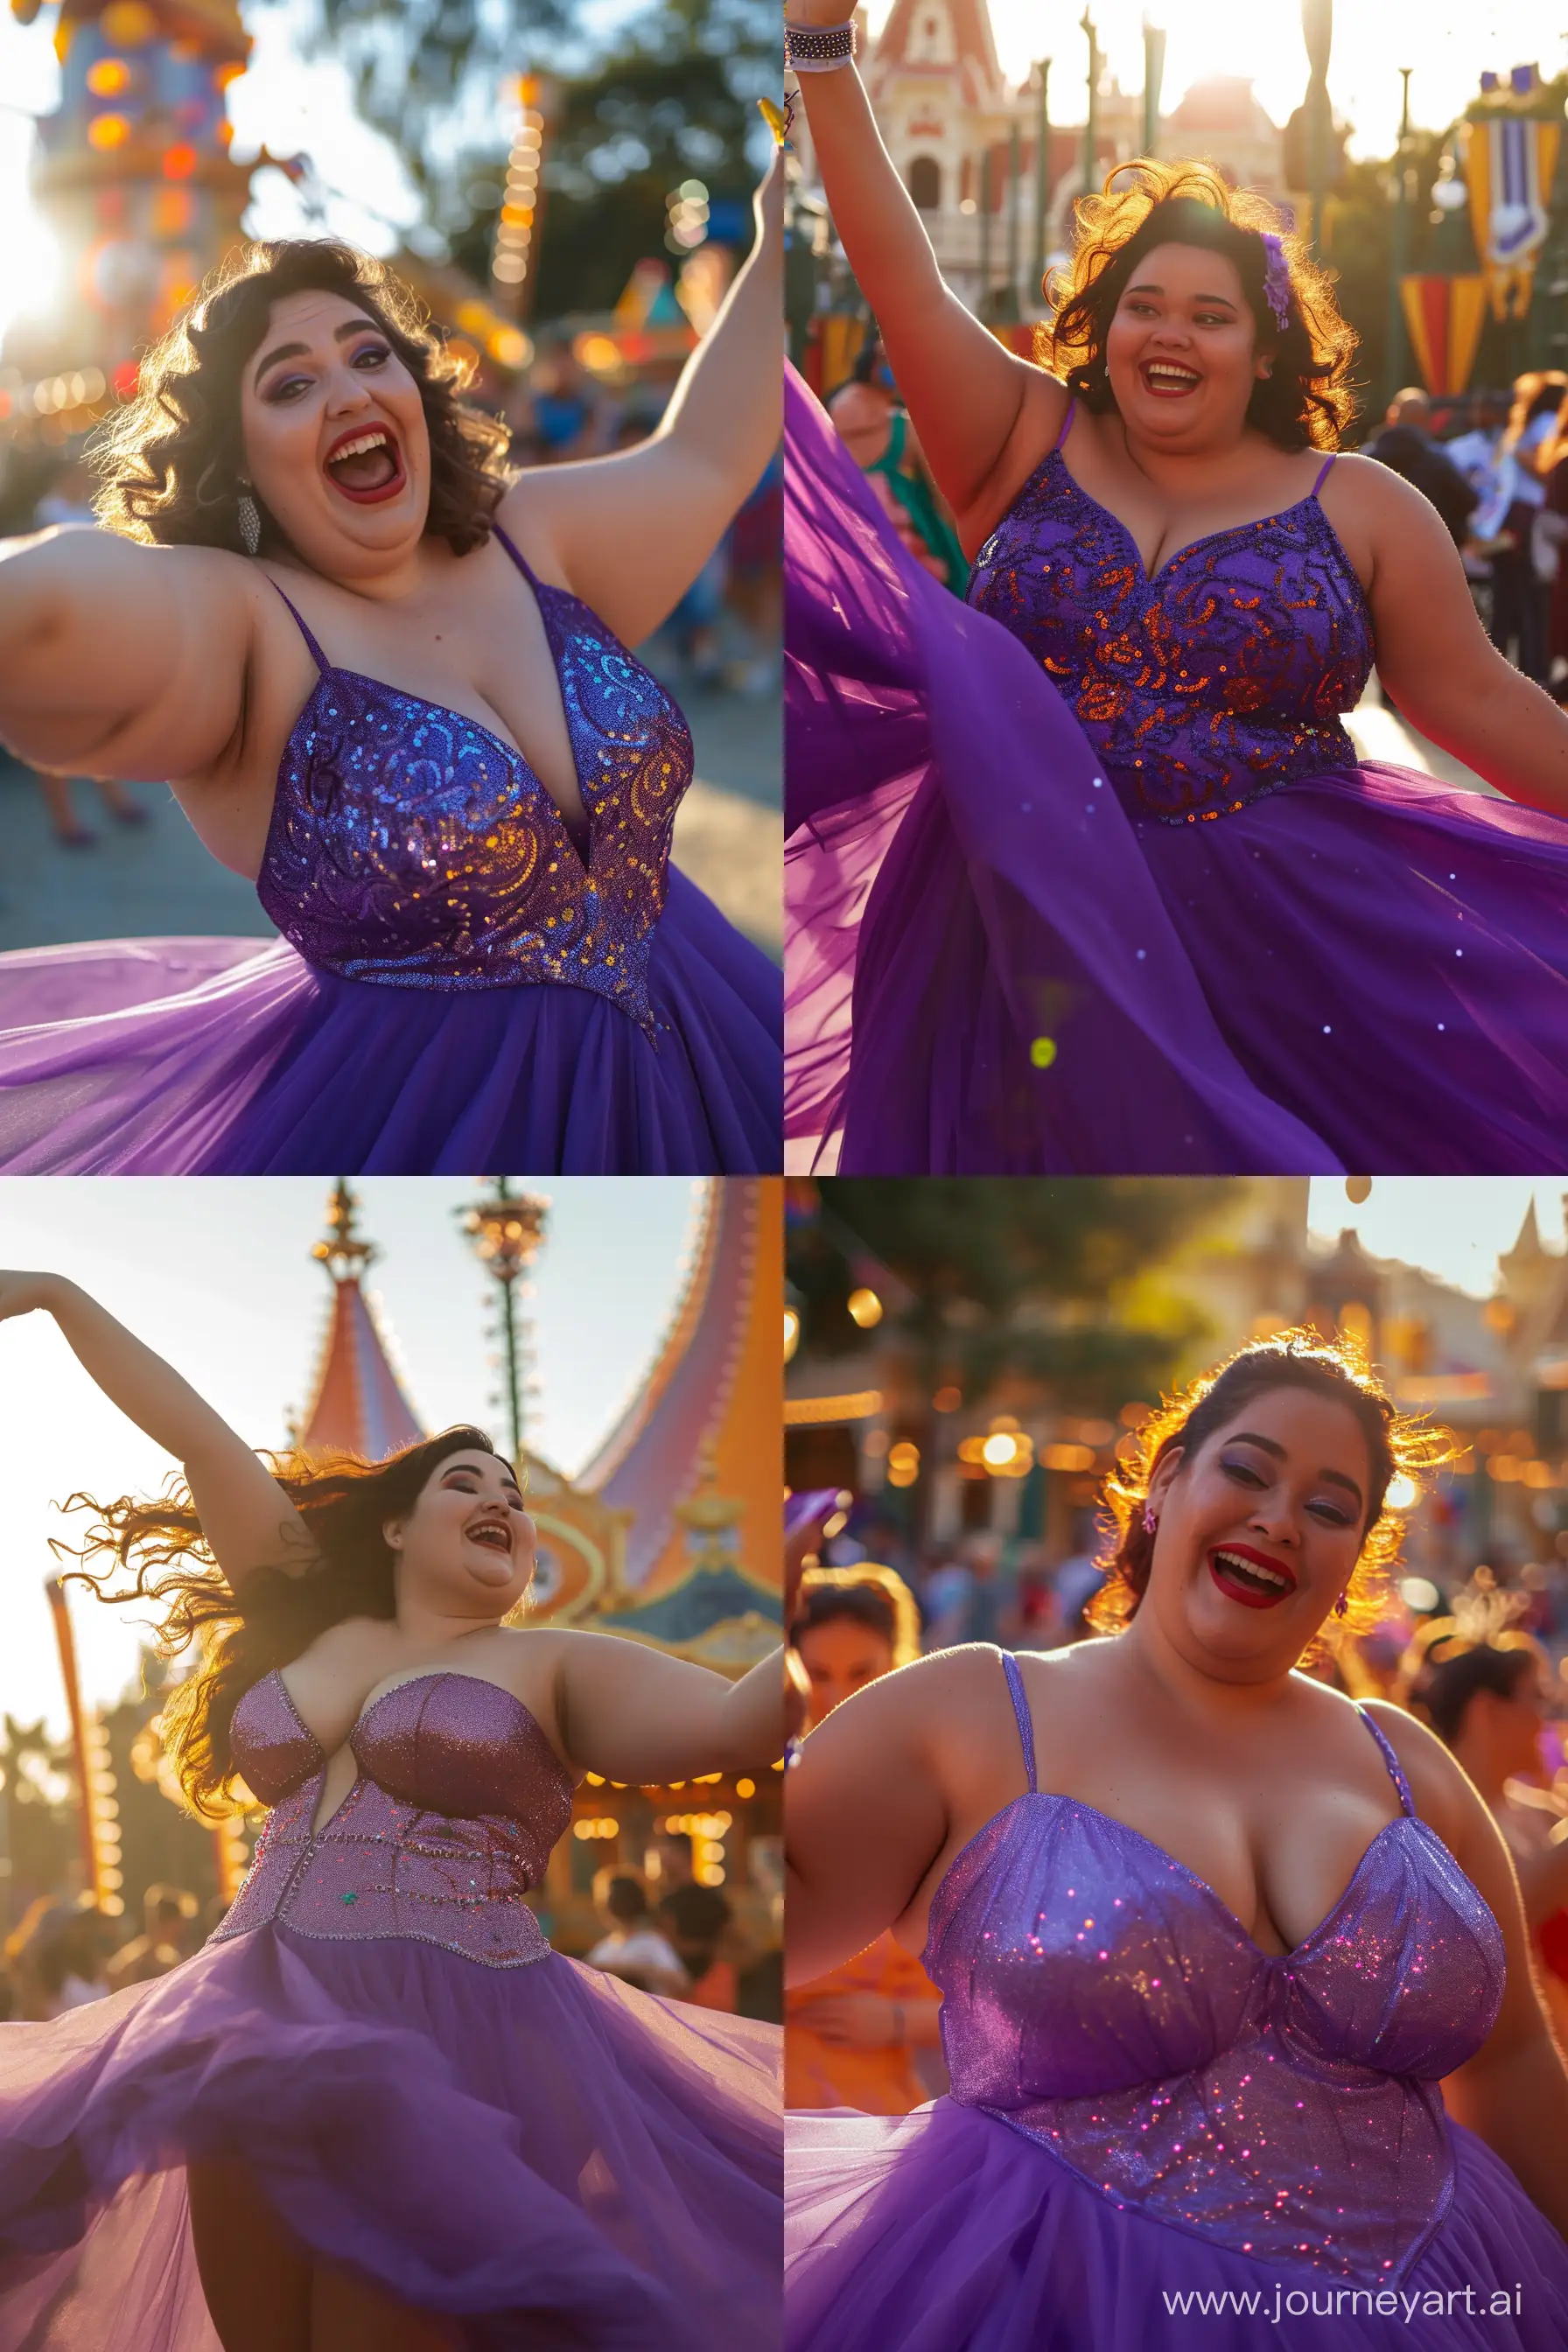 Joyful-Disney-Park-Selfie-Overweight-Woman-in-Vibrant-Purple-Dress